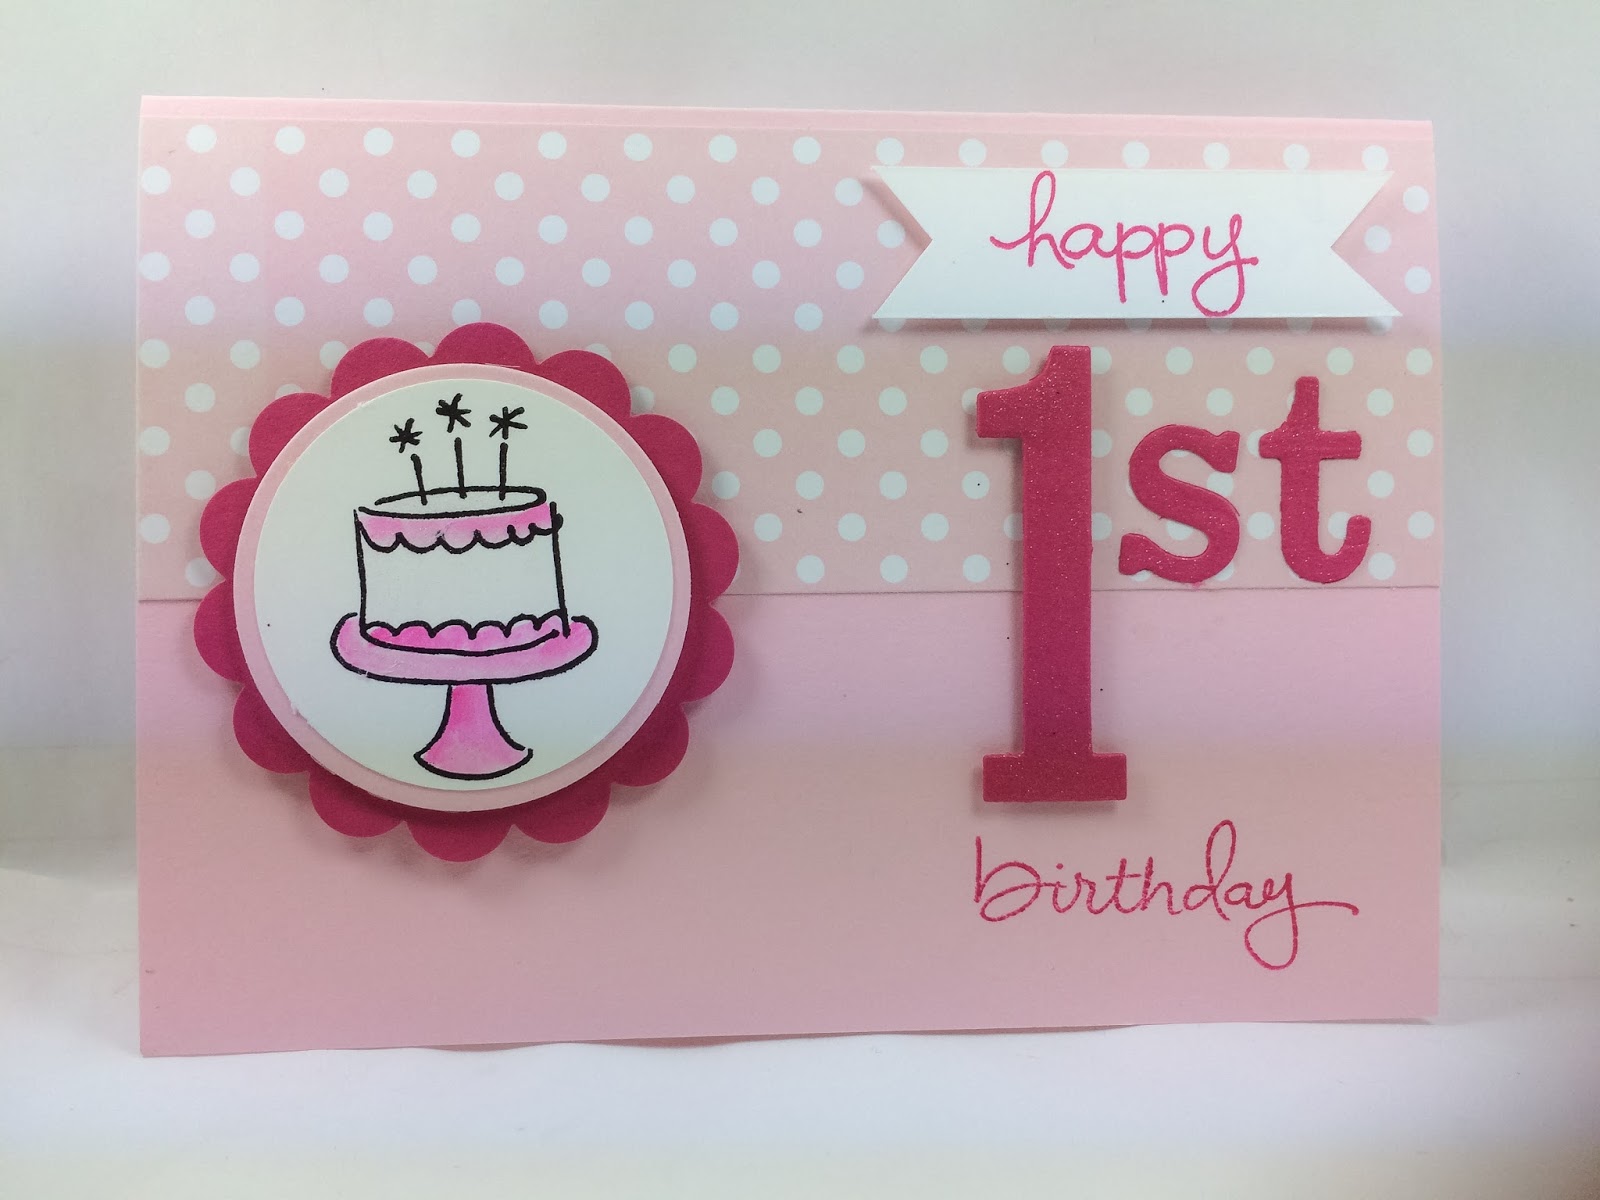 Deb's Stampin' Style: 1st Birthday Card